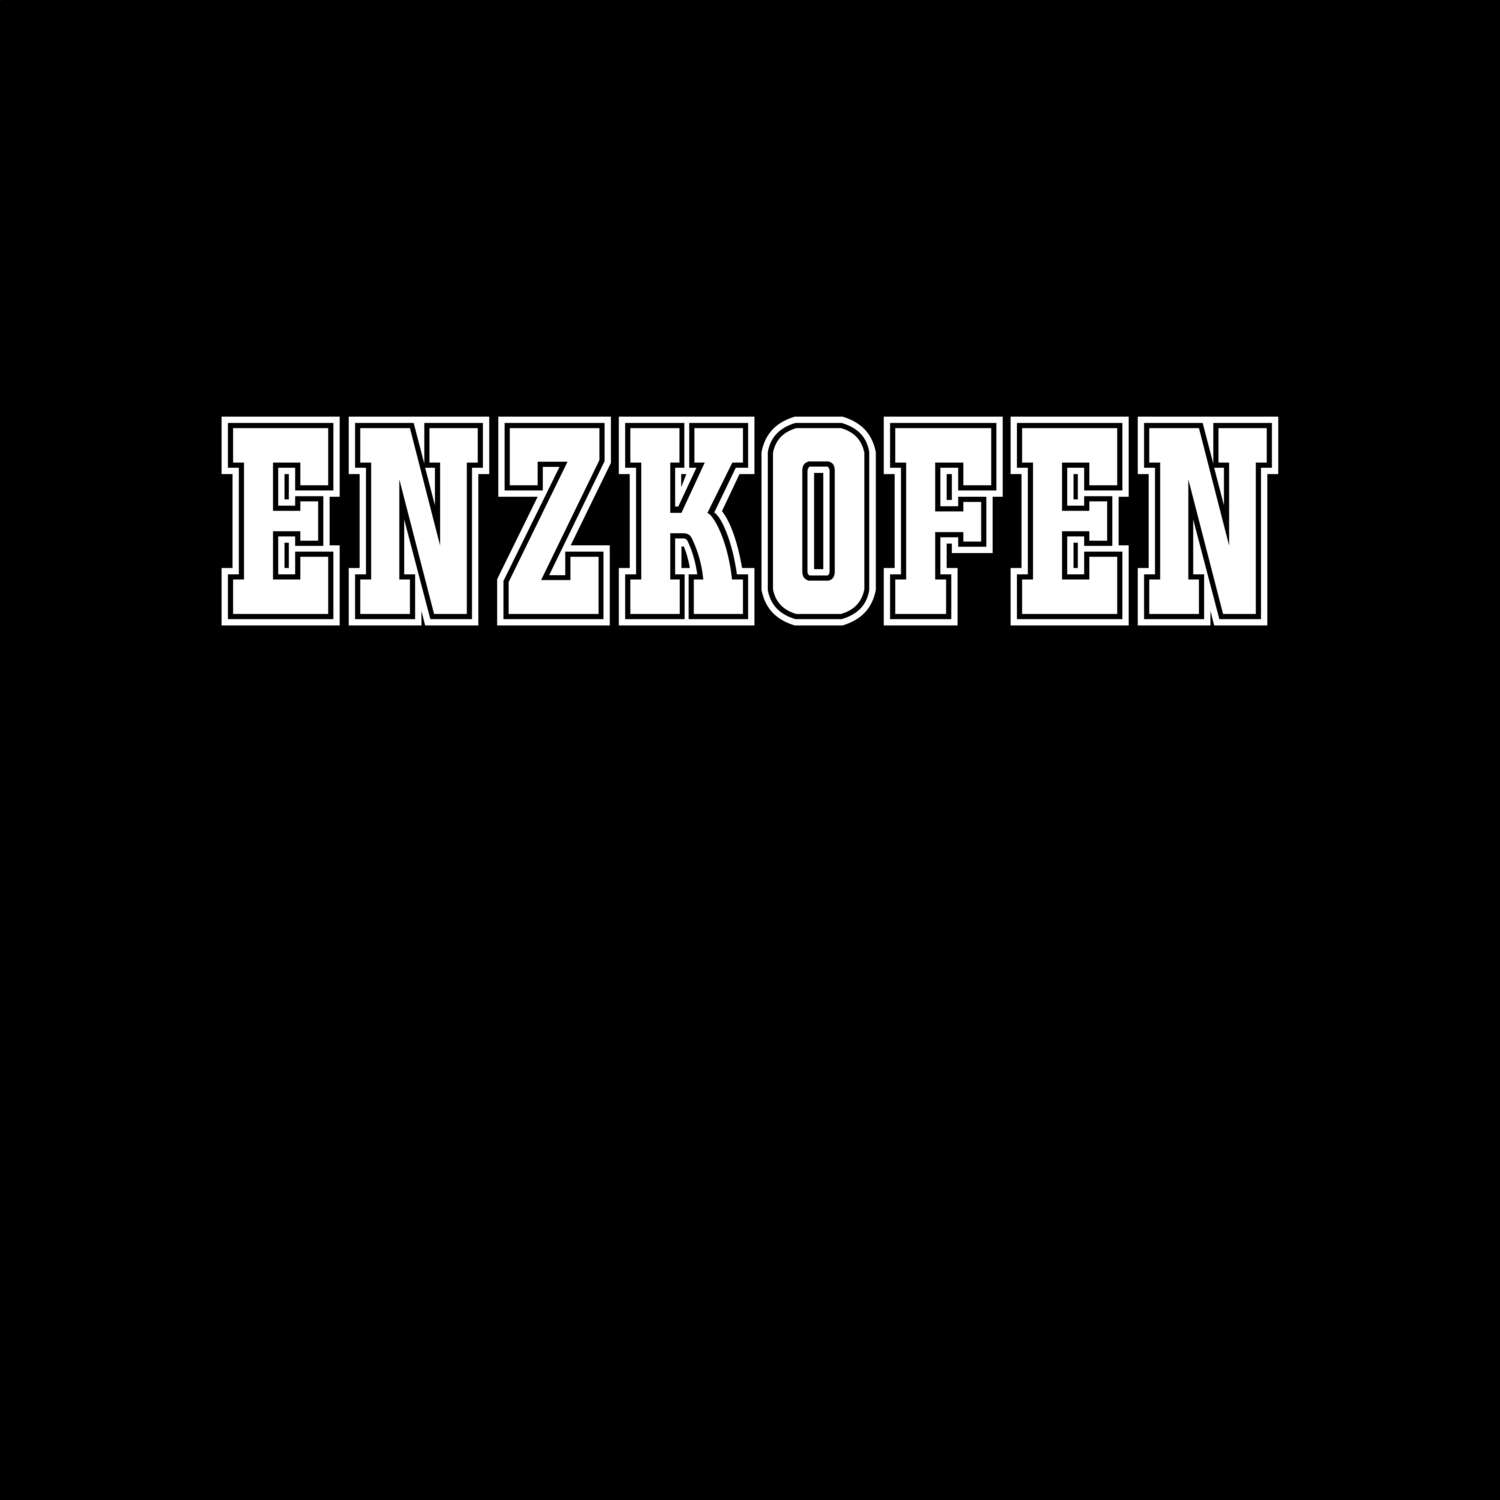 Enzkofen T-Shirt »Classic«